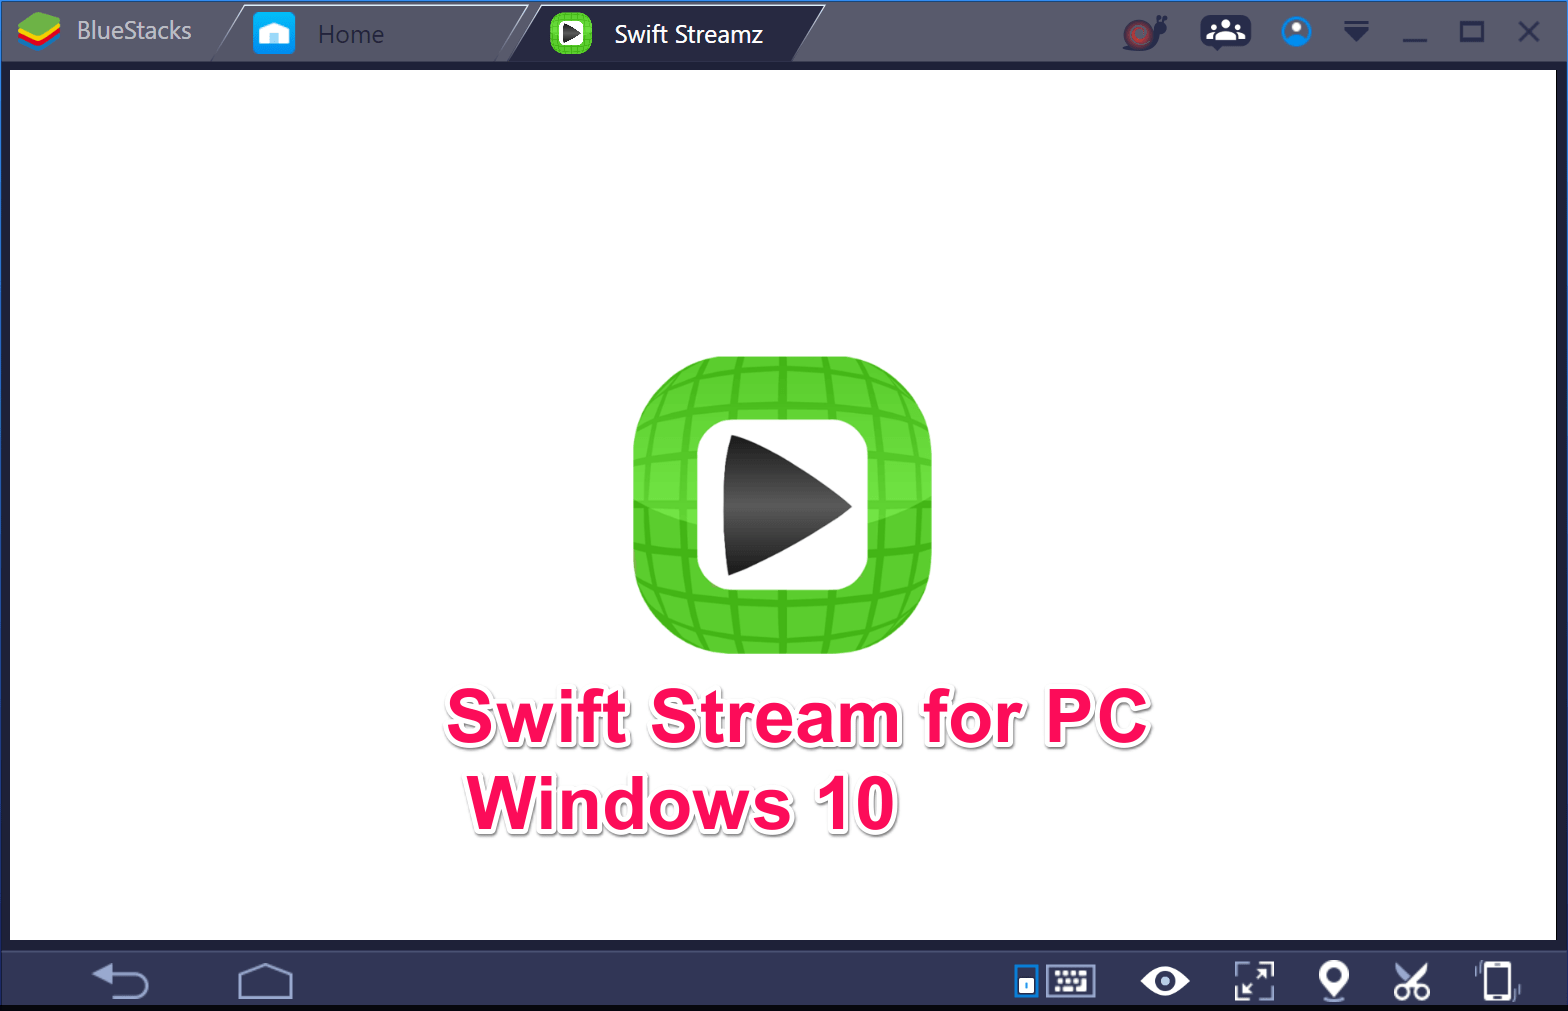 Swift streamz not working